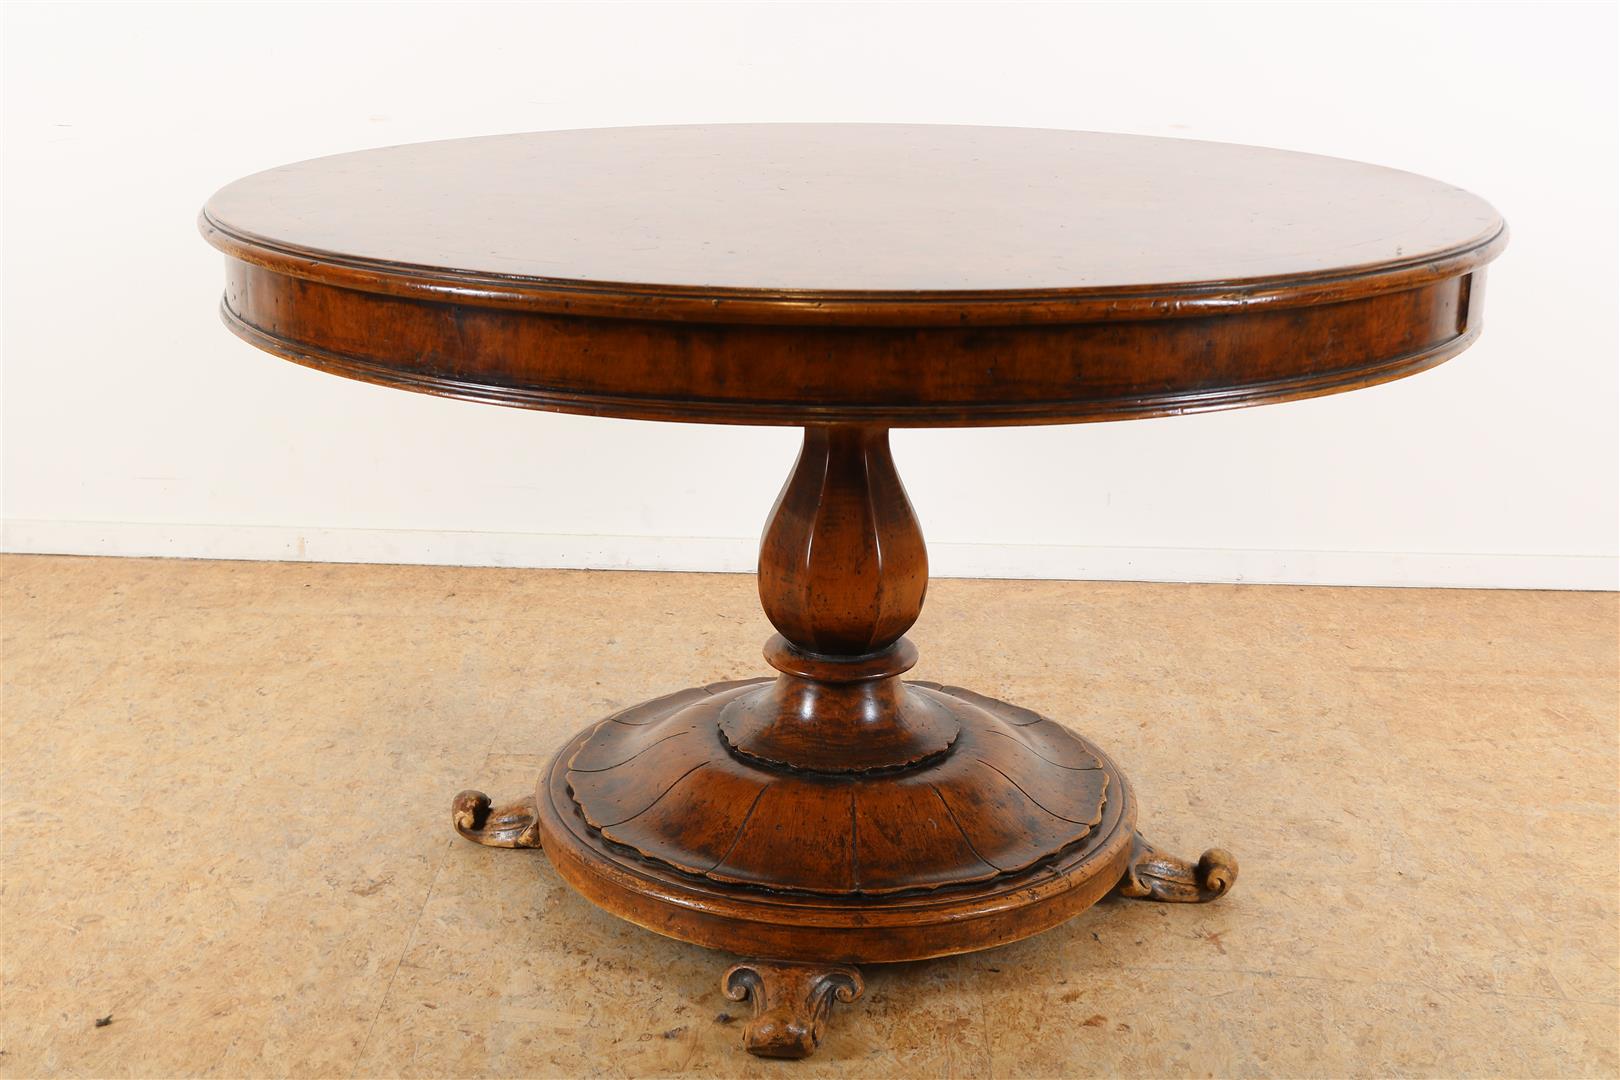 Walnut veneered Biedermeier-style table on column leg ending in round plateau and 2 plinth